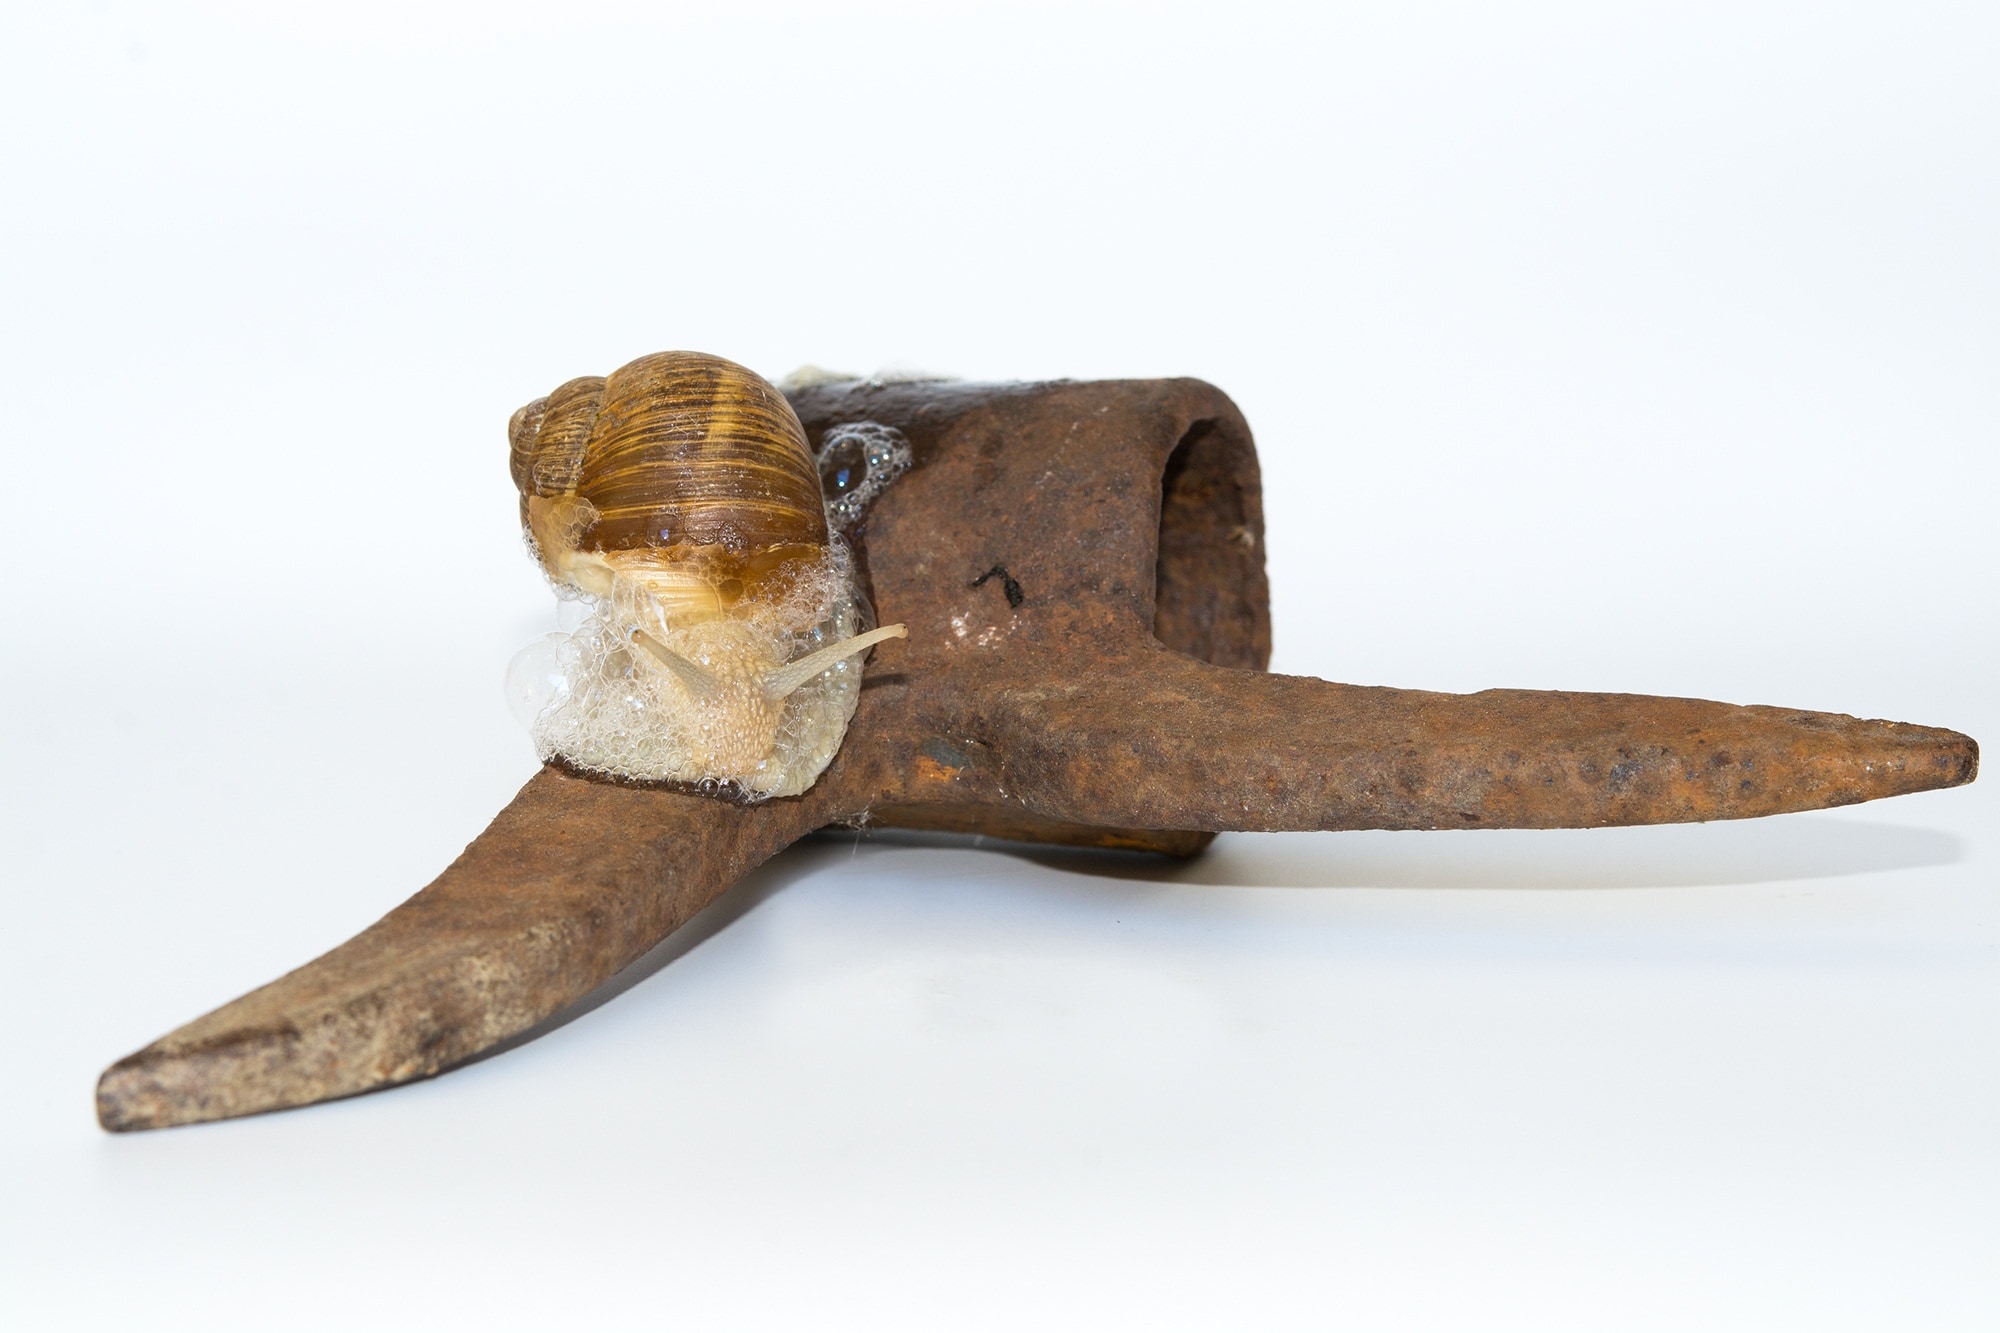 snail and metal tool